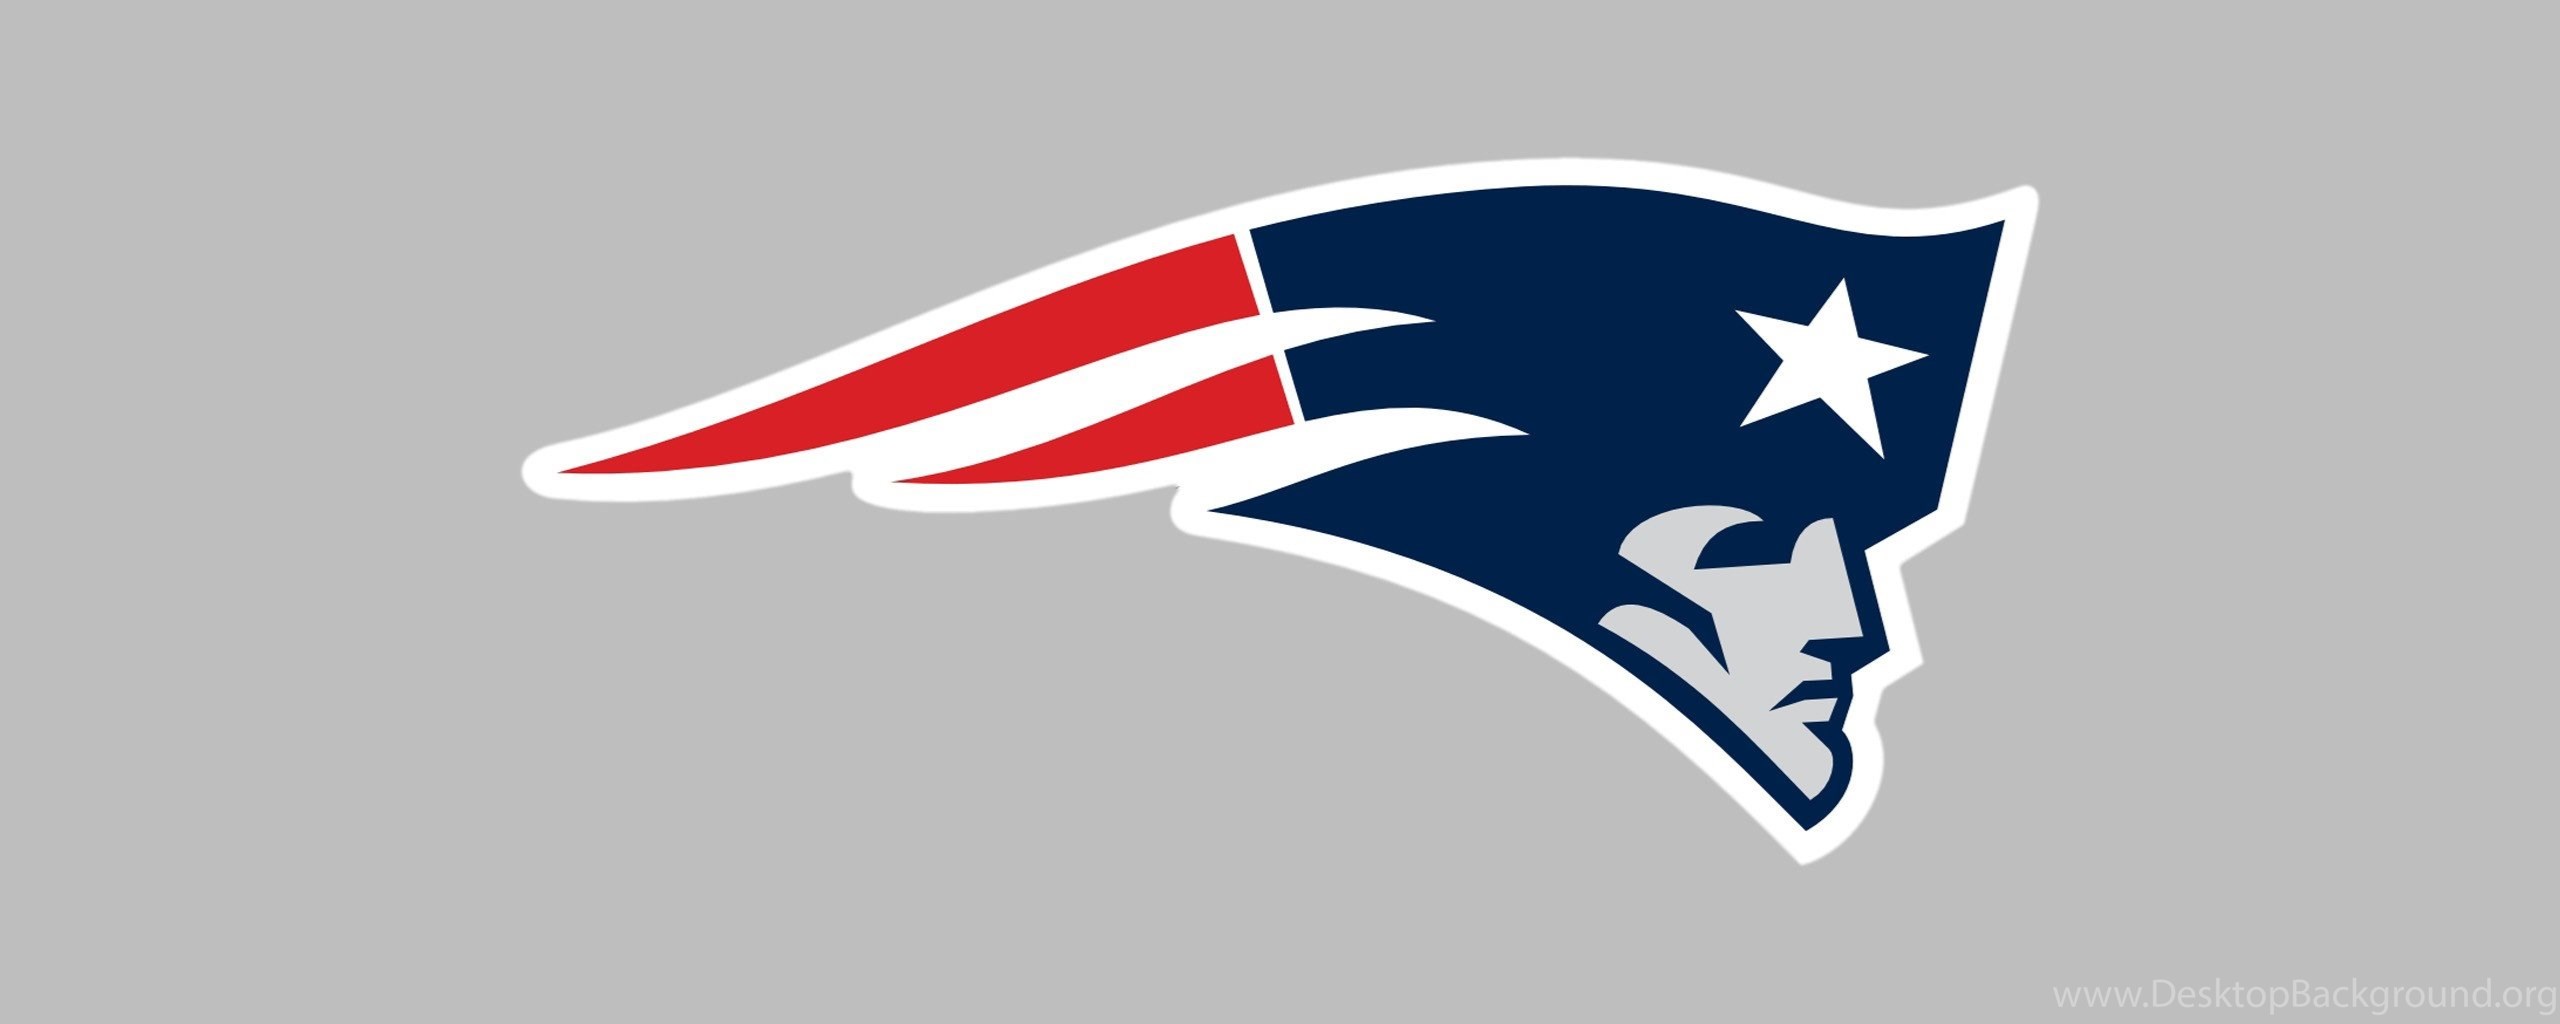 New England Nfl Team Logos Pixels Patriots Wallpaper Gallsource.com Desktop Background